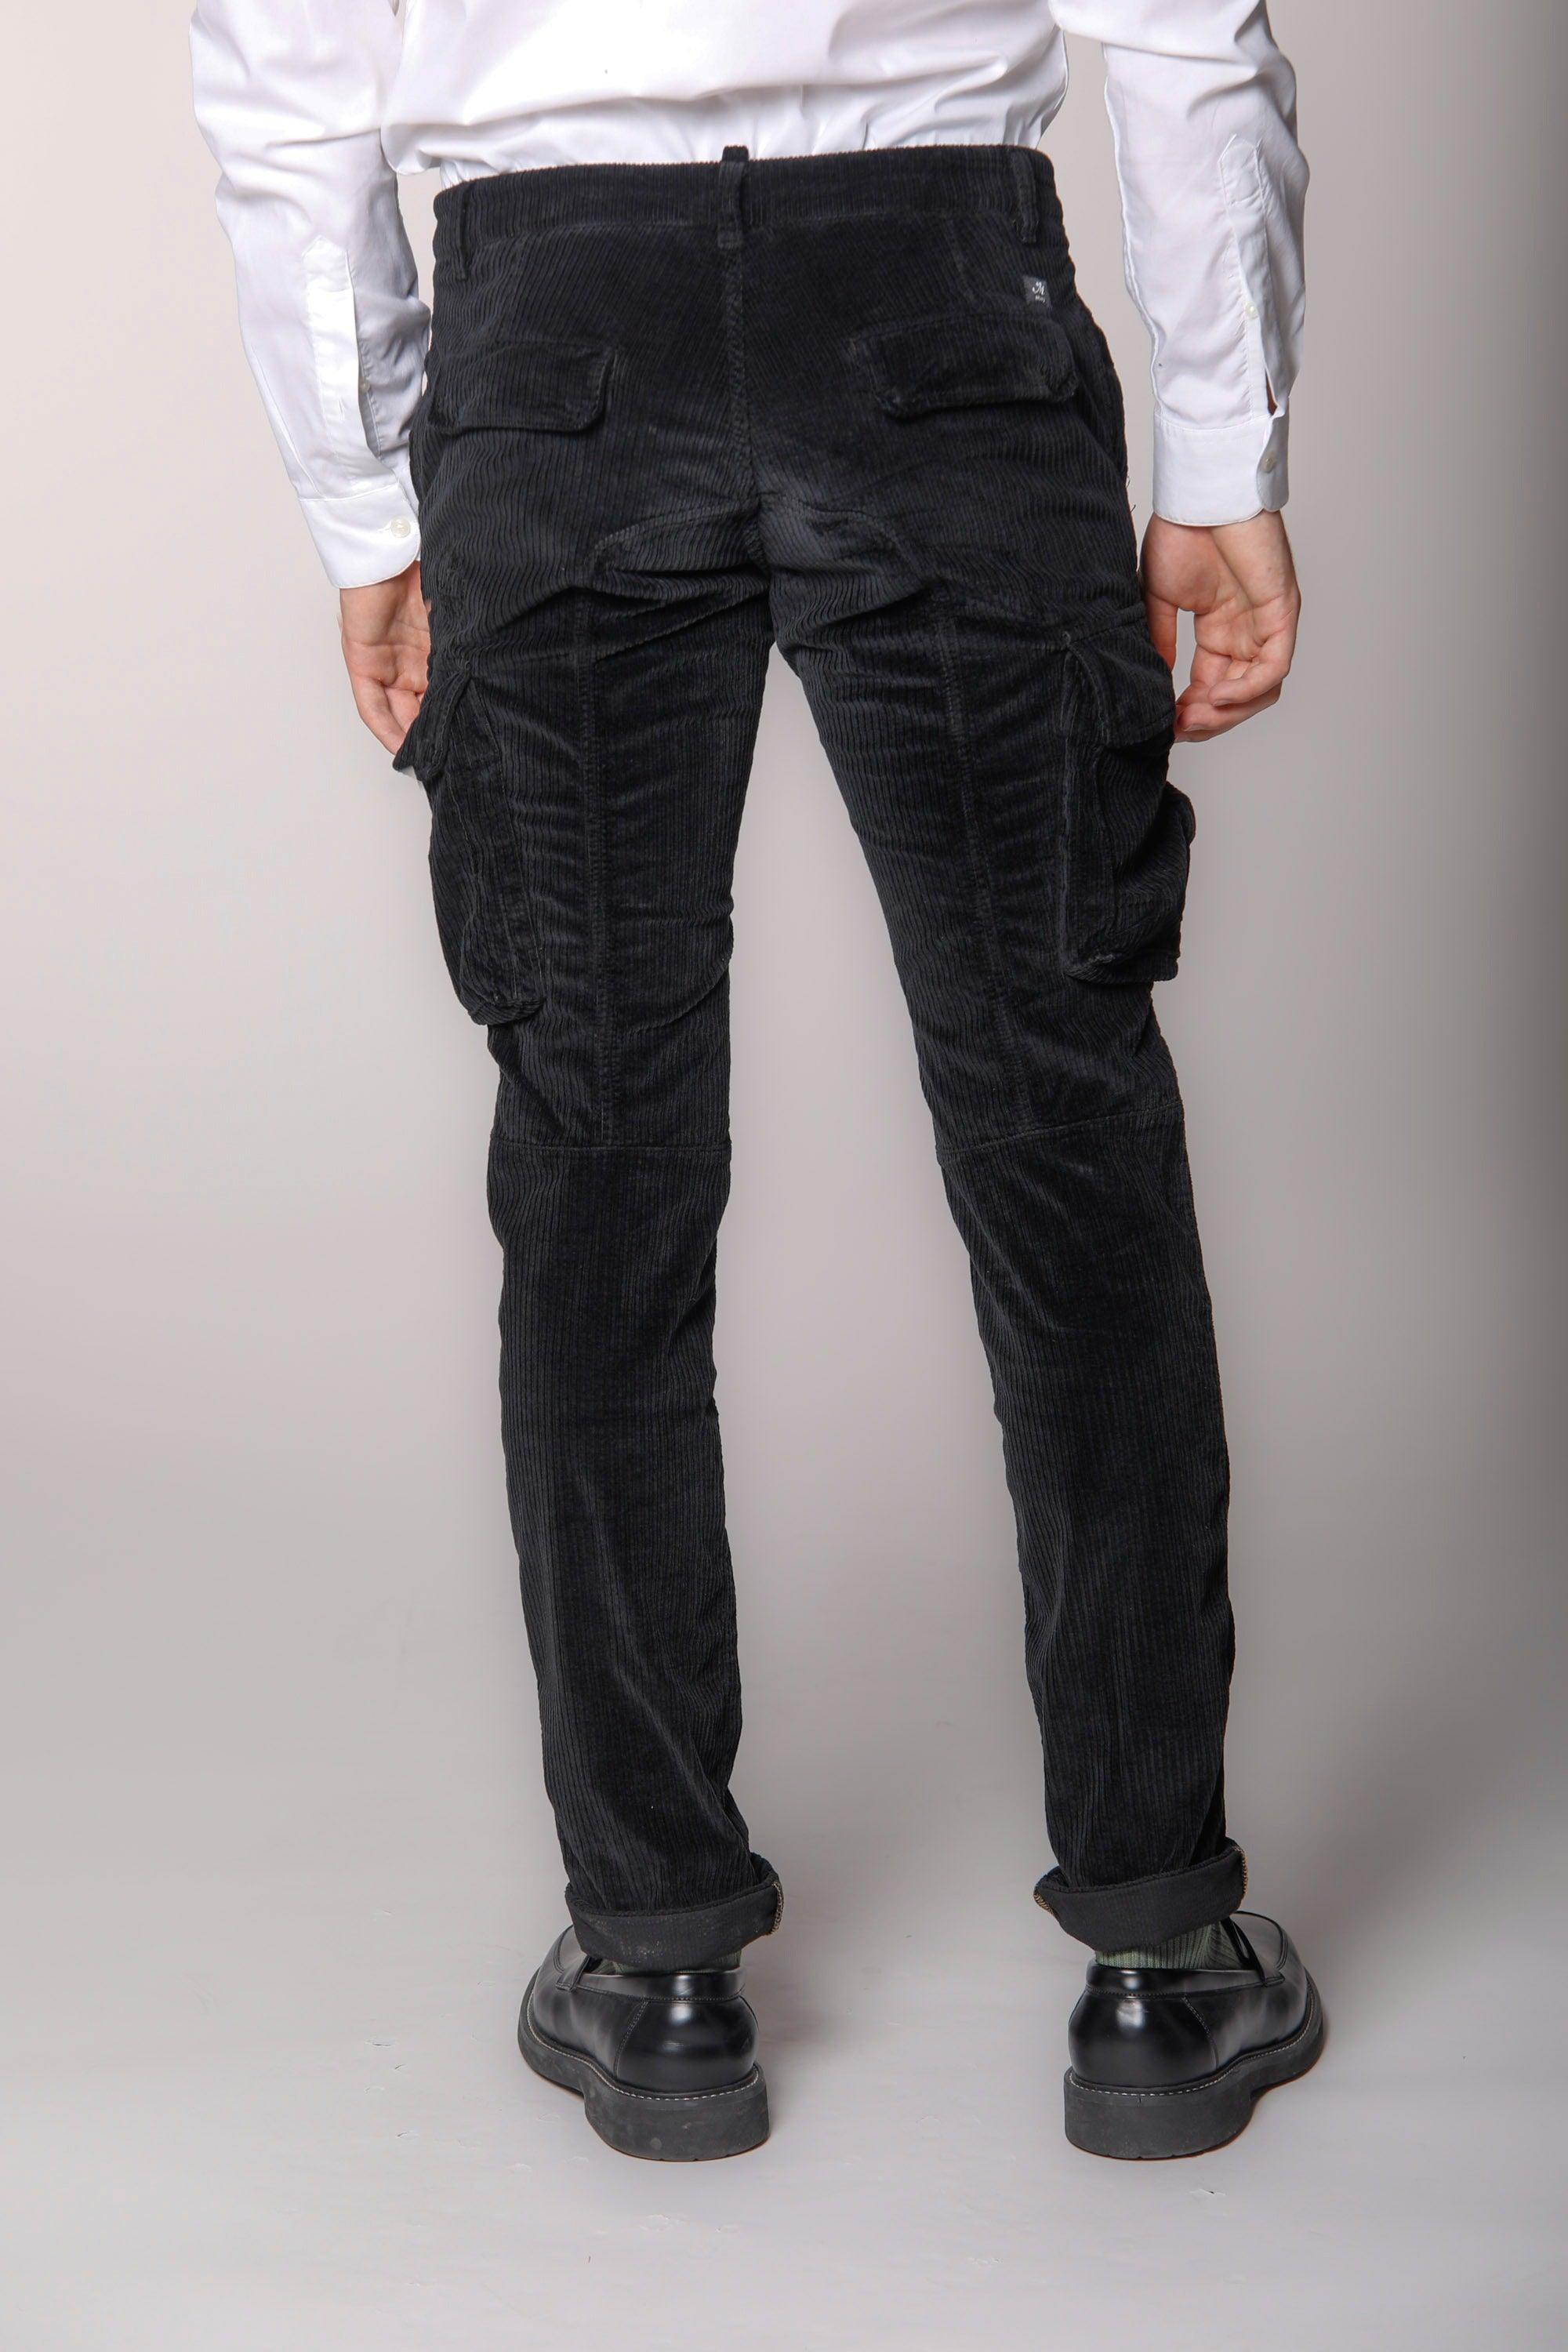 Chile pantalon cargo homme en velours 500 rayues coupe extra slim